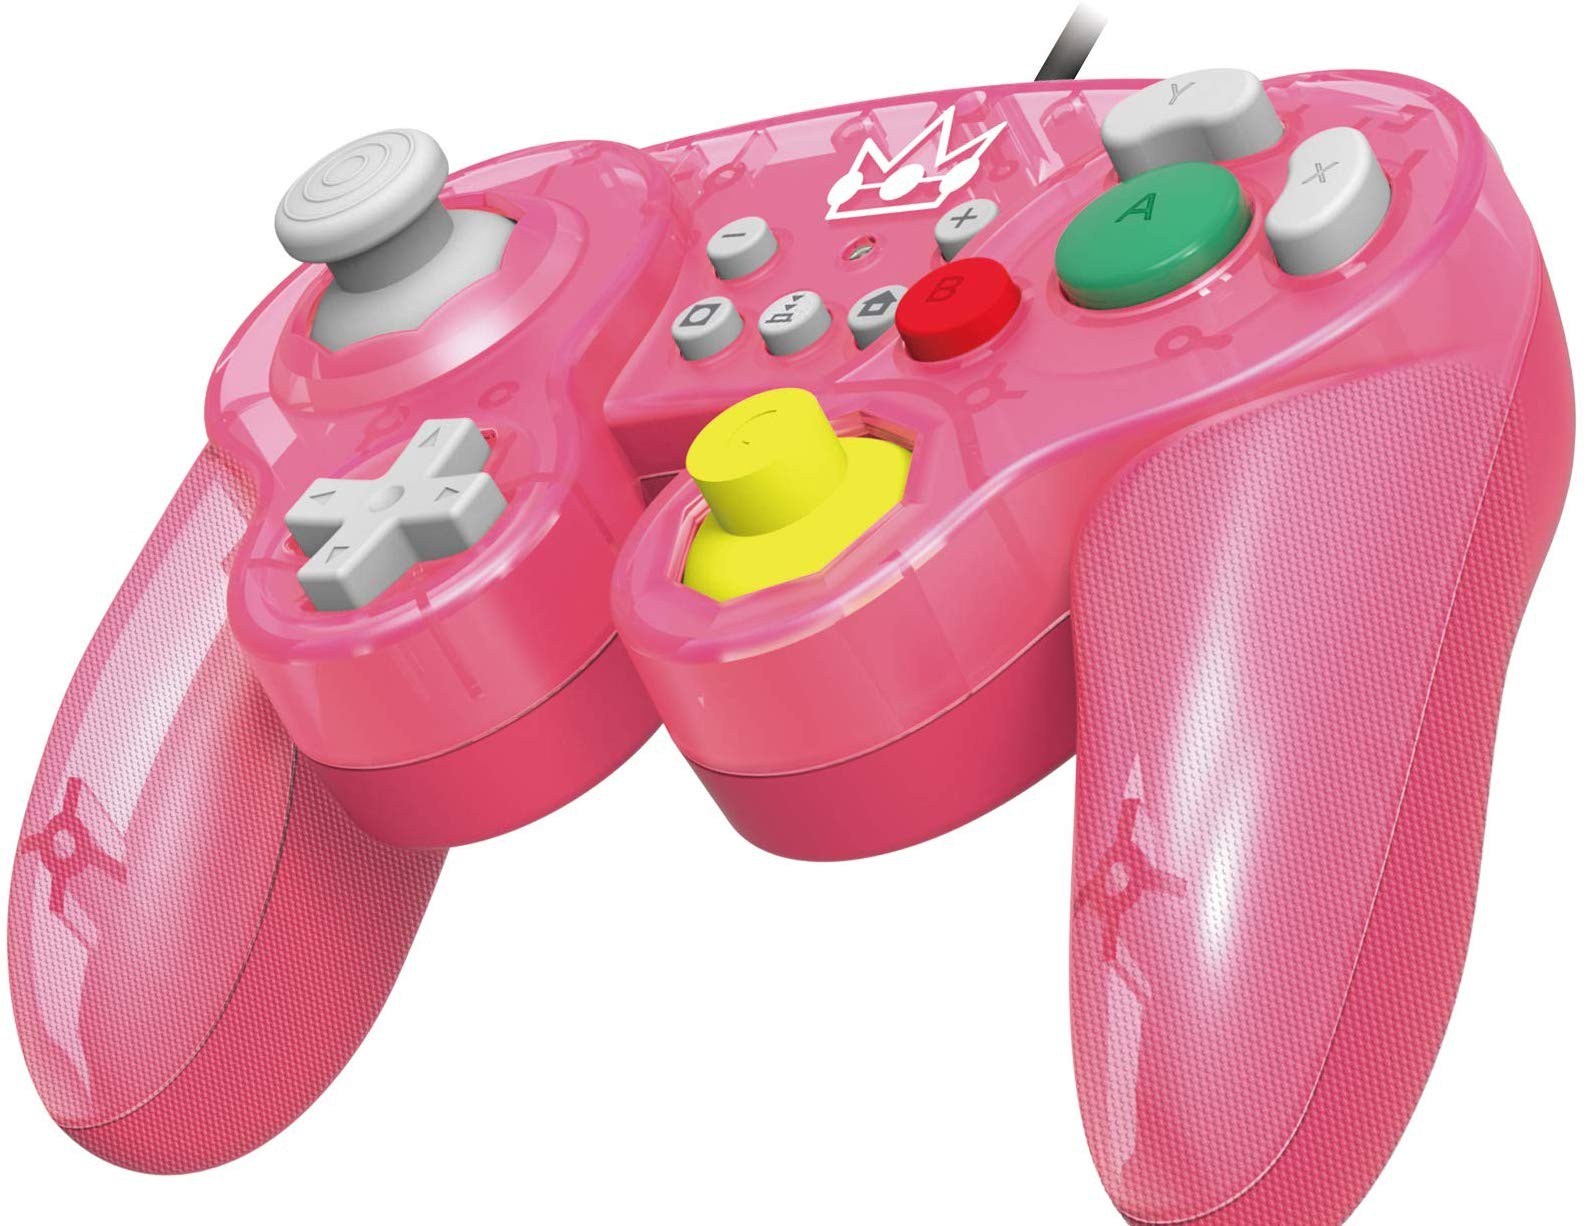 HORI Nintendo Switch Battle Pad (Princess Peach) GameCube Style Controller